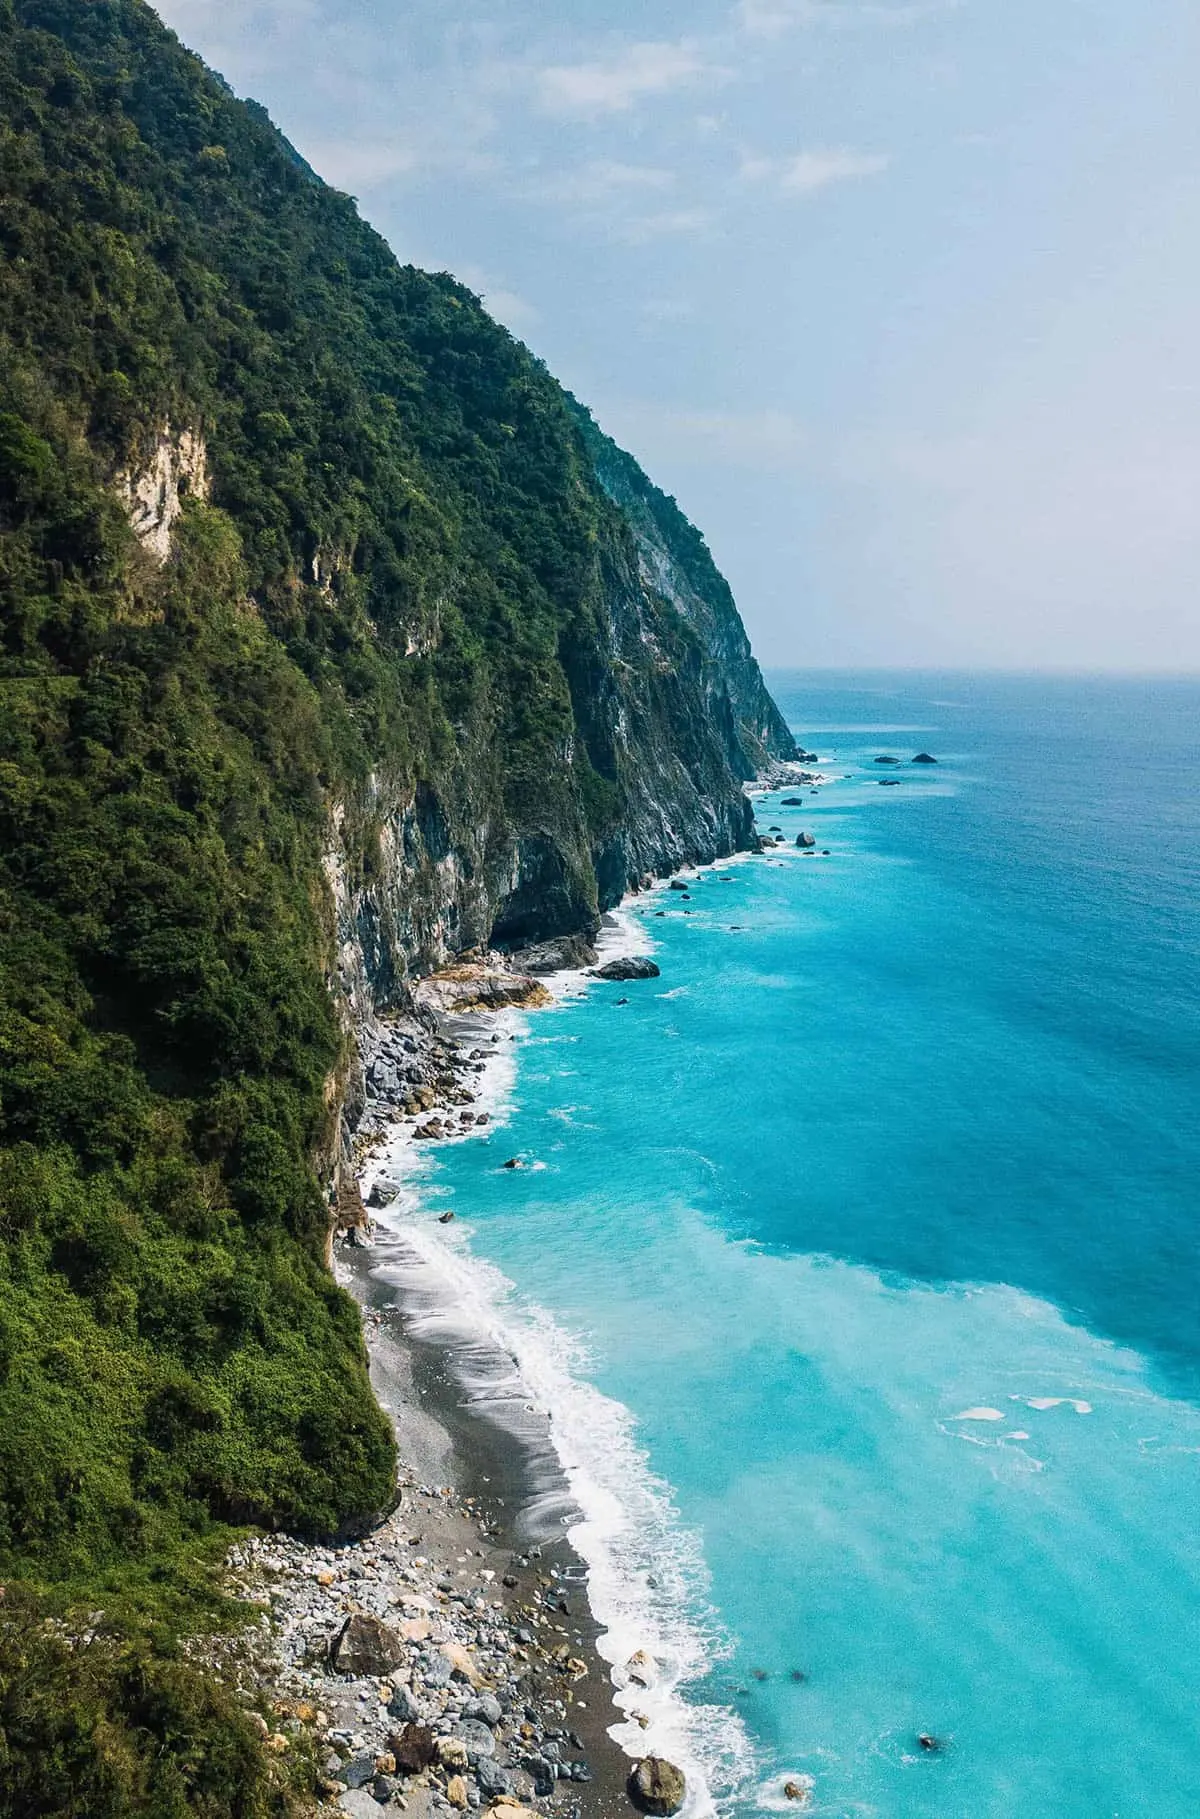 Qingshui Cliff in Taroko National Park in Hualien, Taiwan